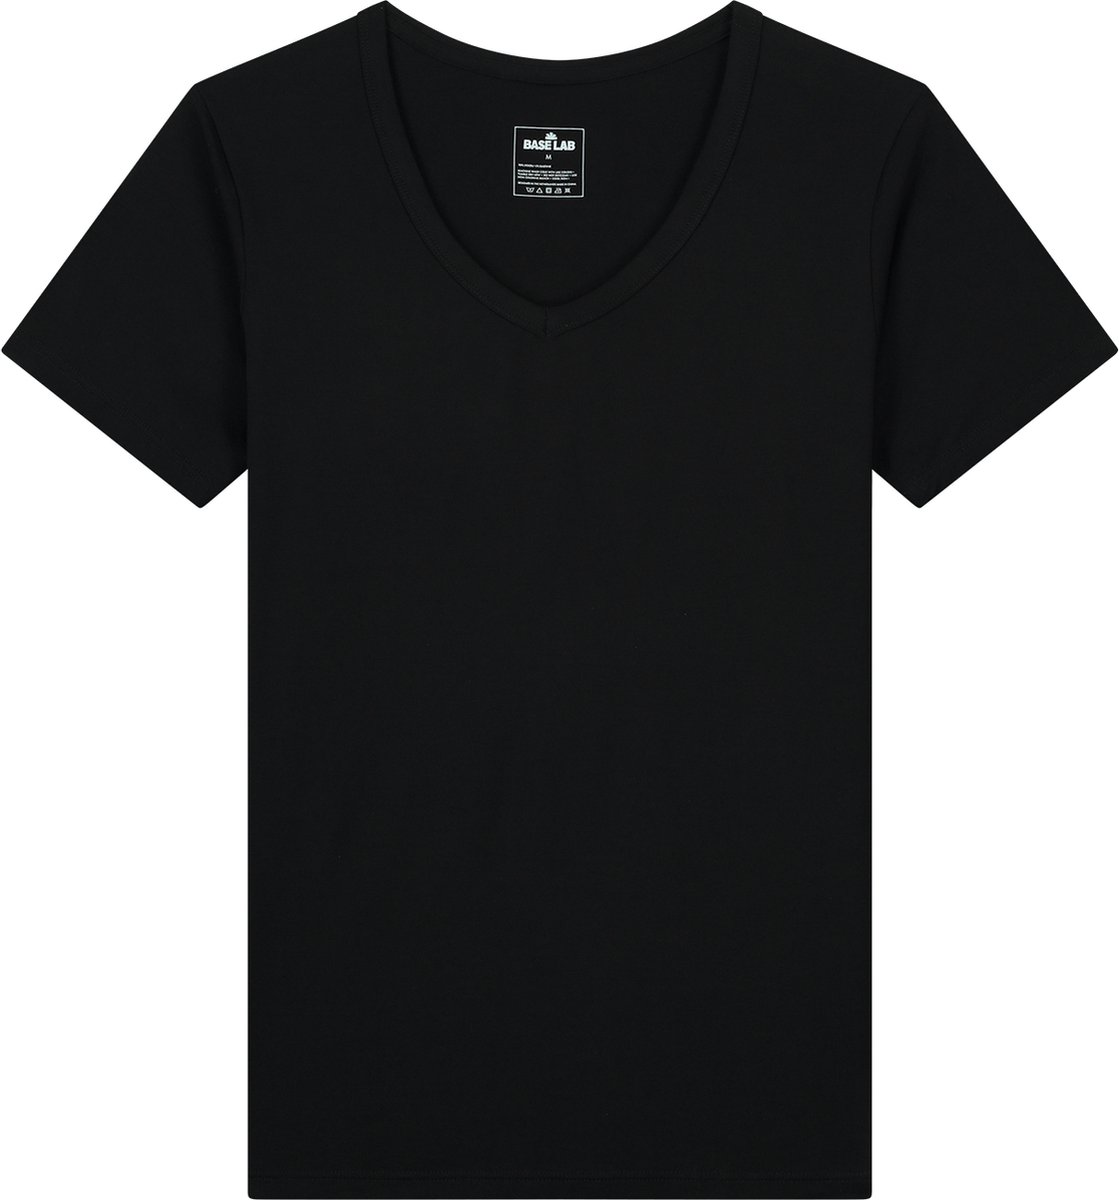 Baselab - Ondershirt - Zwart - Maat XL